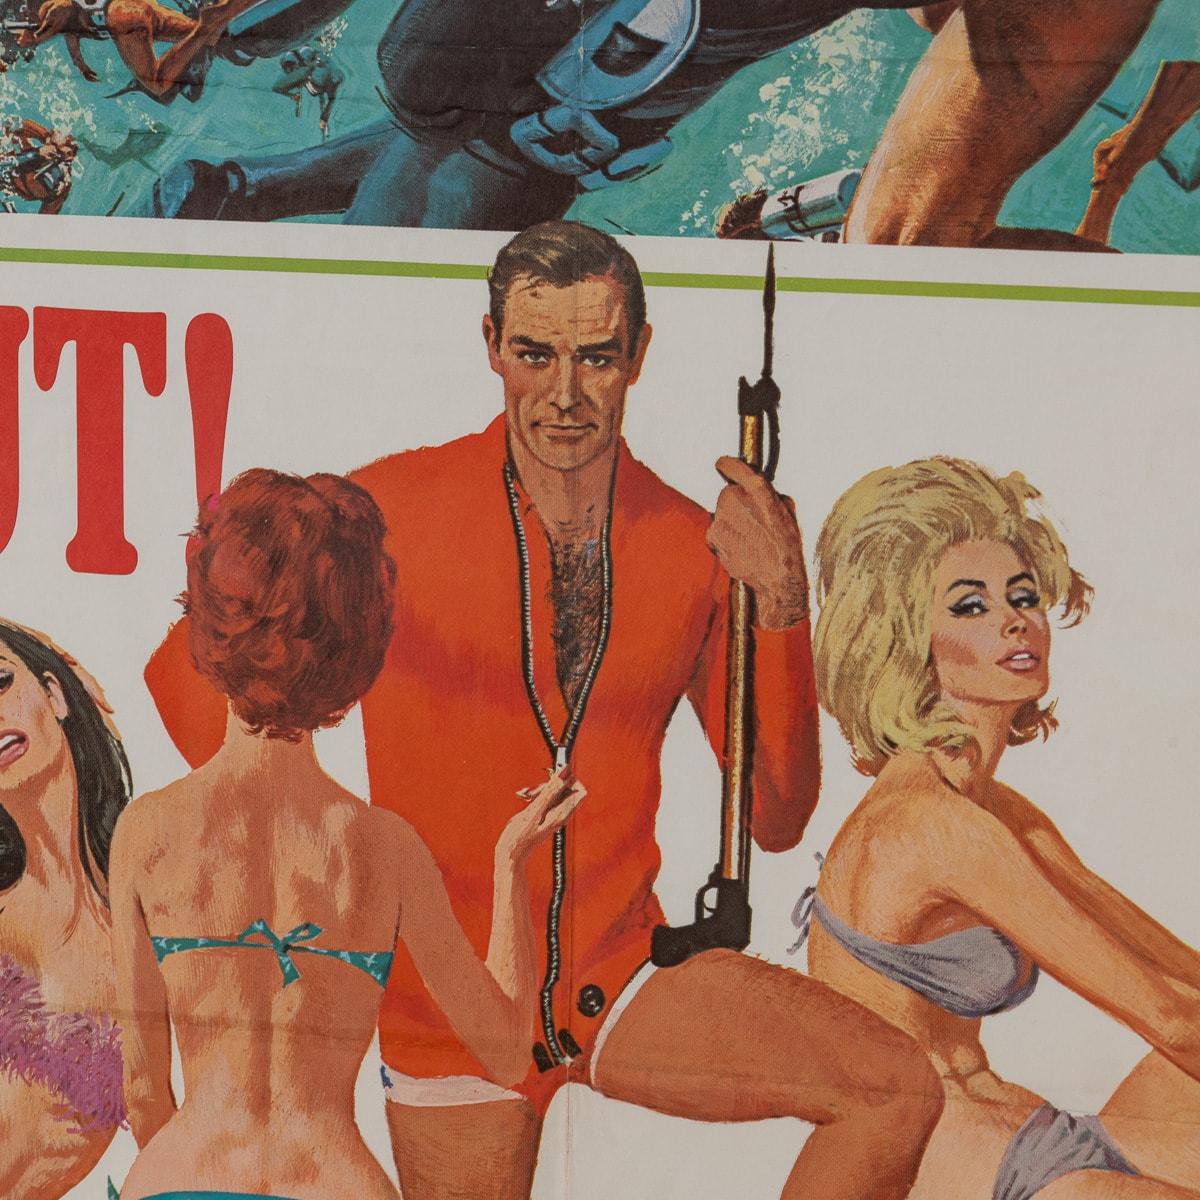 Original U.S James Bond 007 'Thunderball' Poster c.1965 For Sale 6